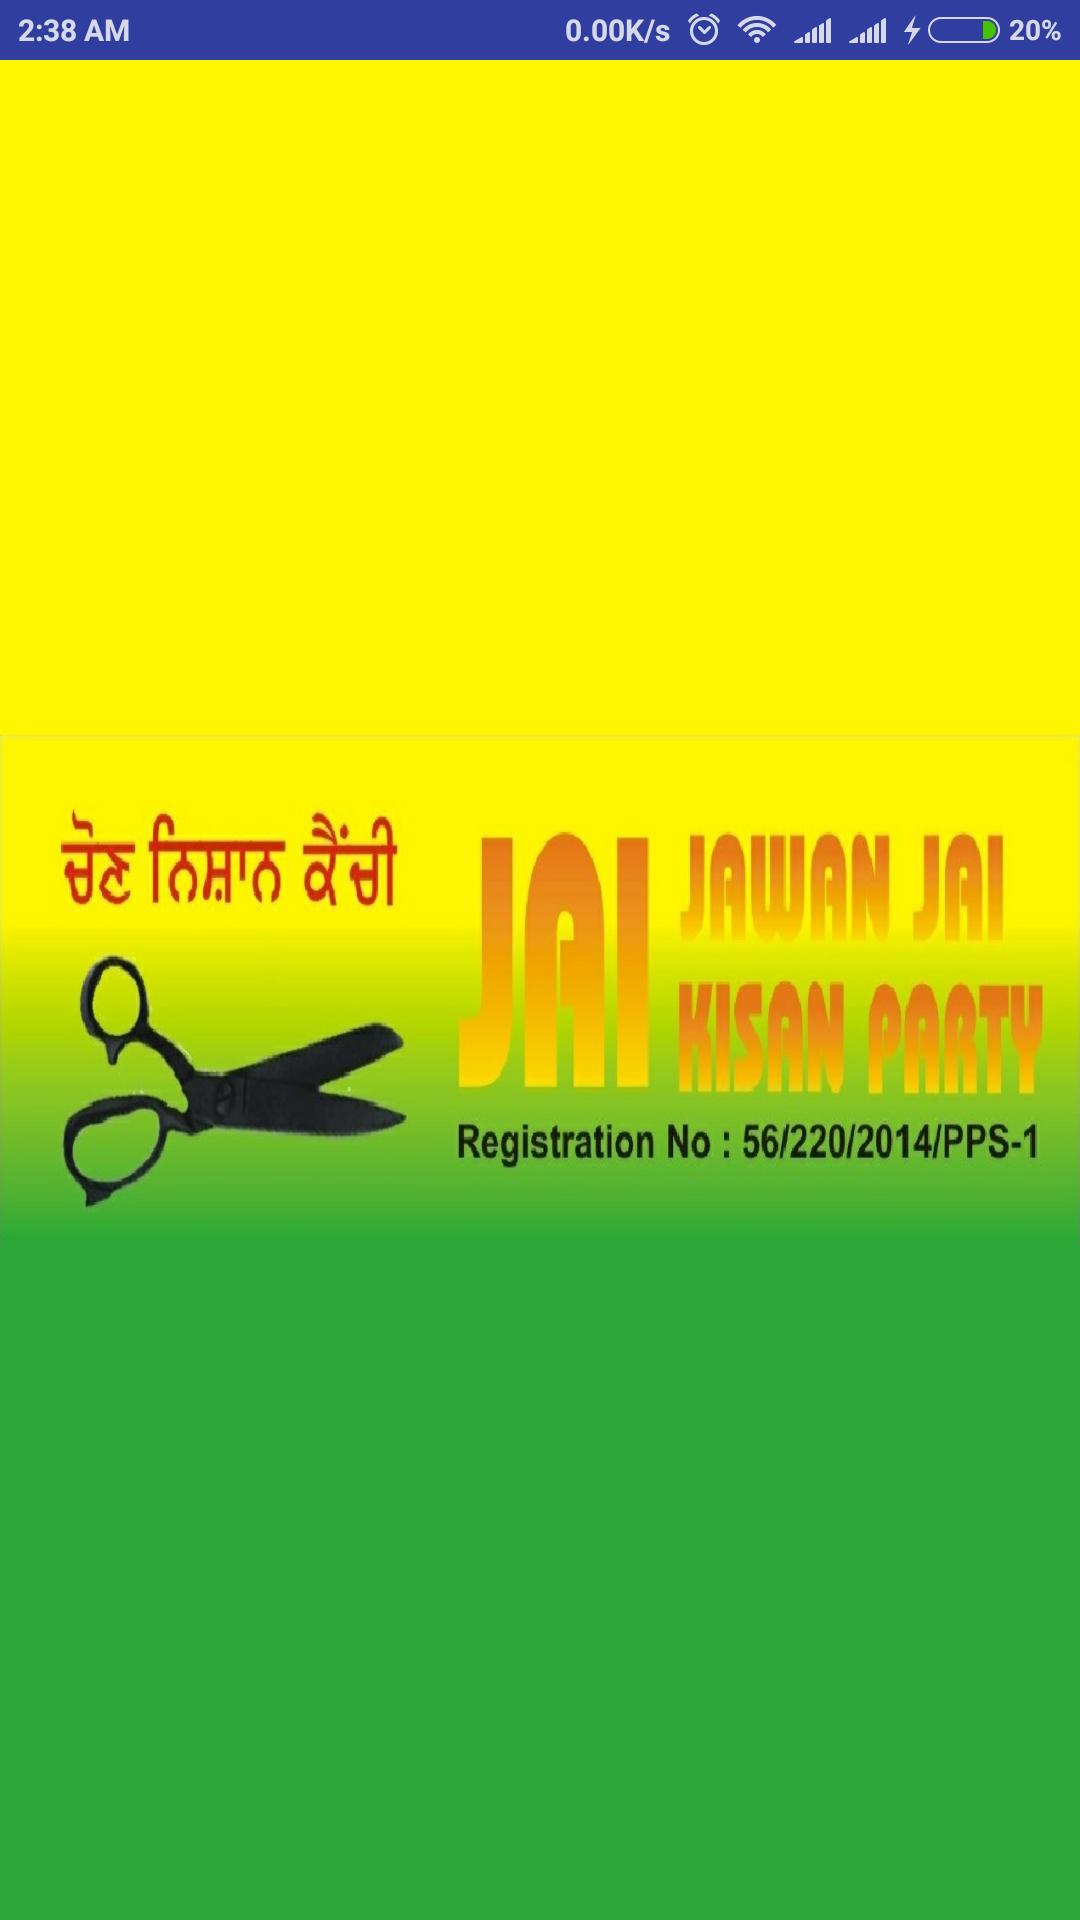 Jai Jawan Jai Kisan Party For Android Apk Download